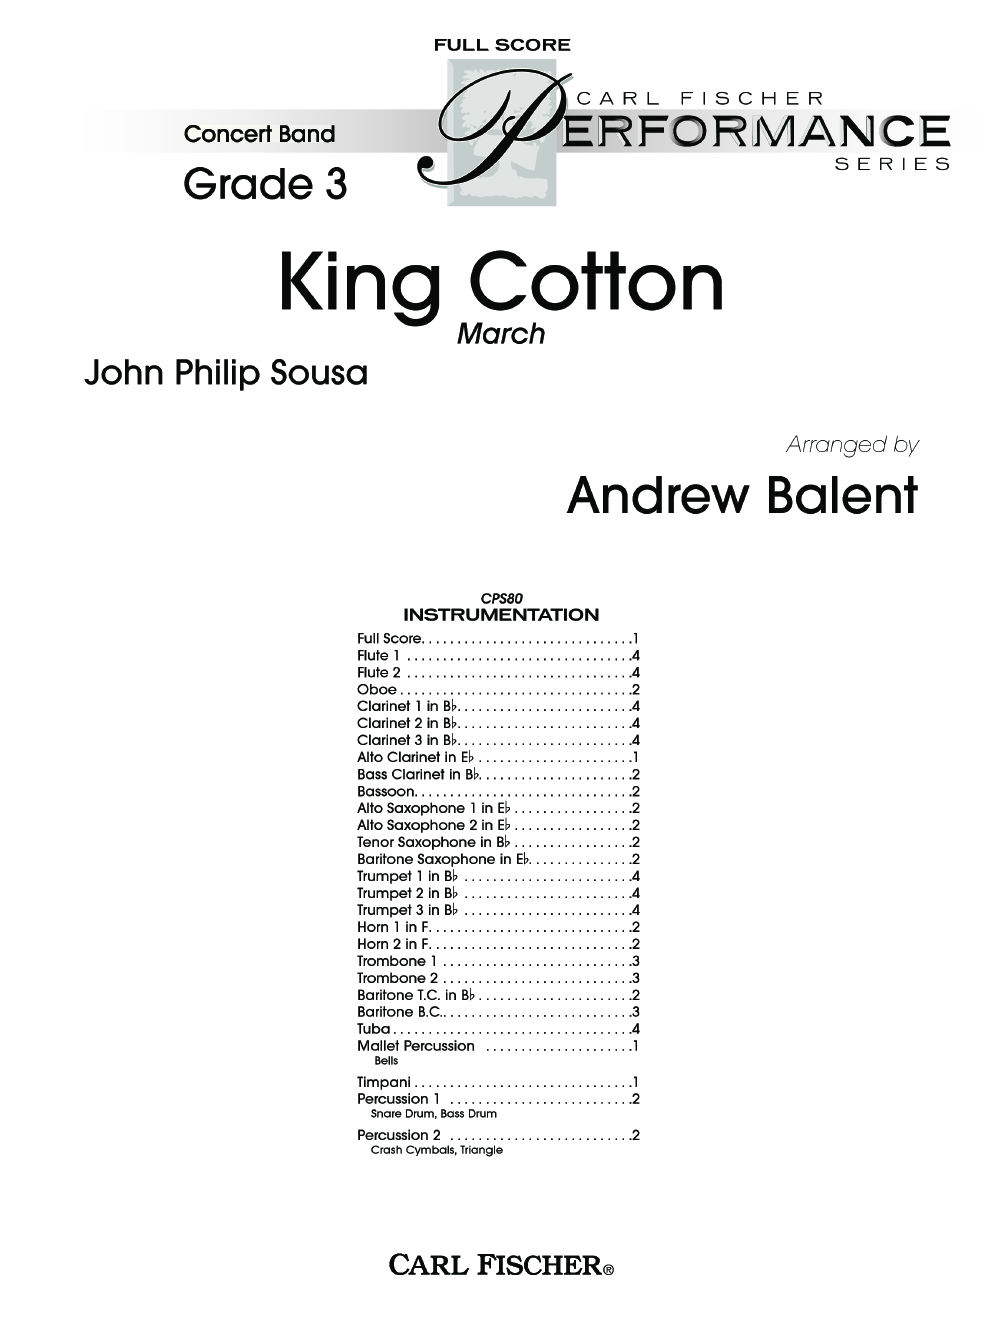 King Cotton by John Philip Sousa/arr. Balent